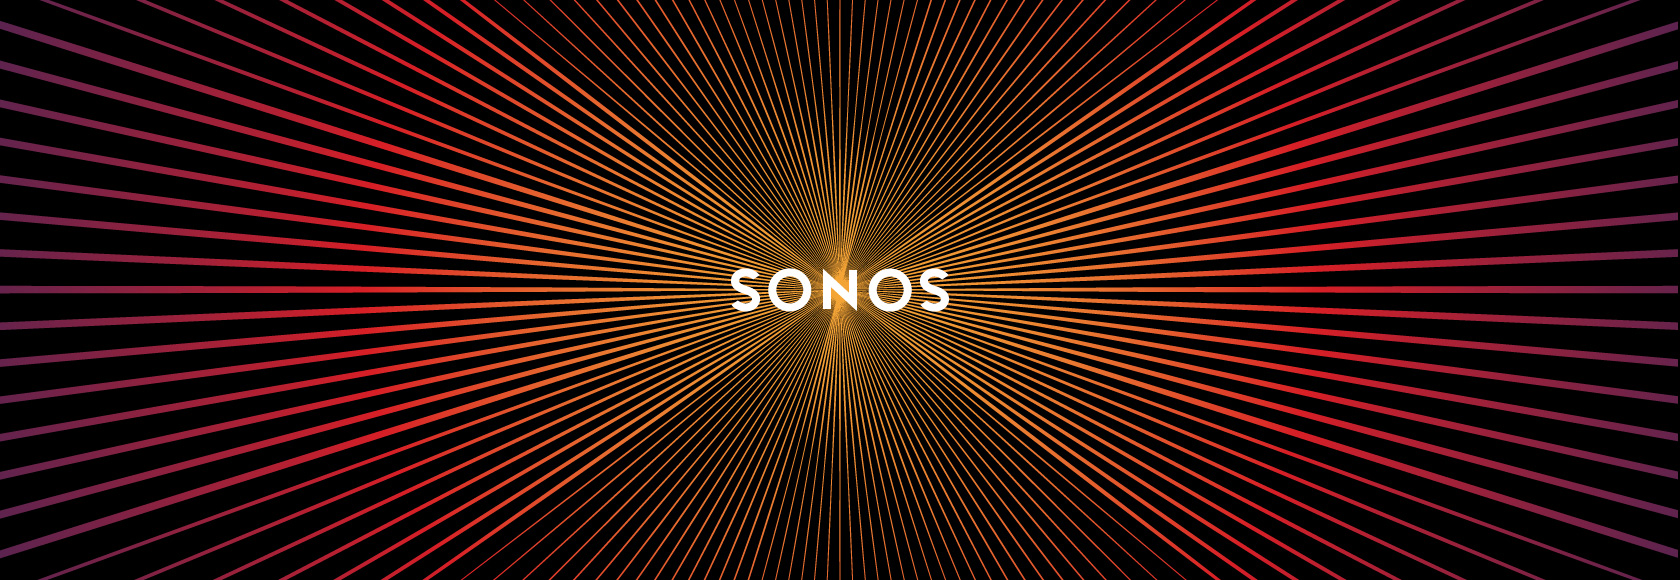 Le nouveau logo de Sonos